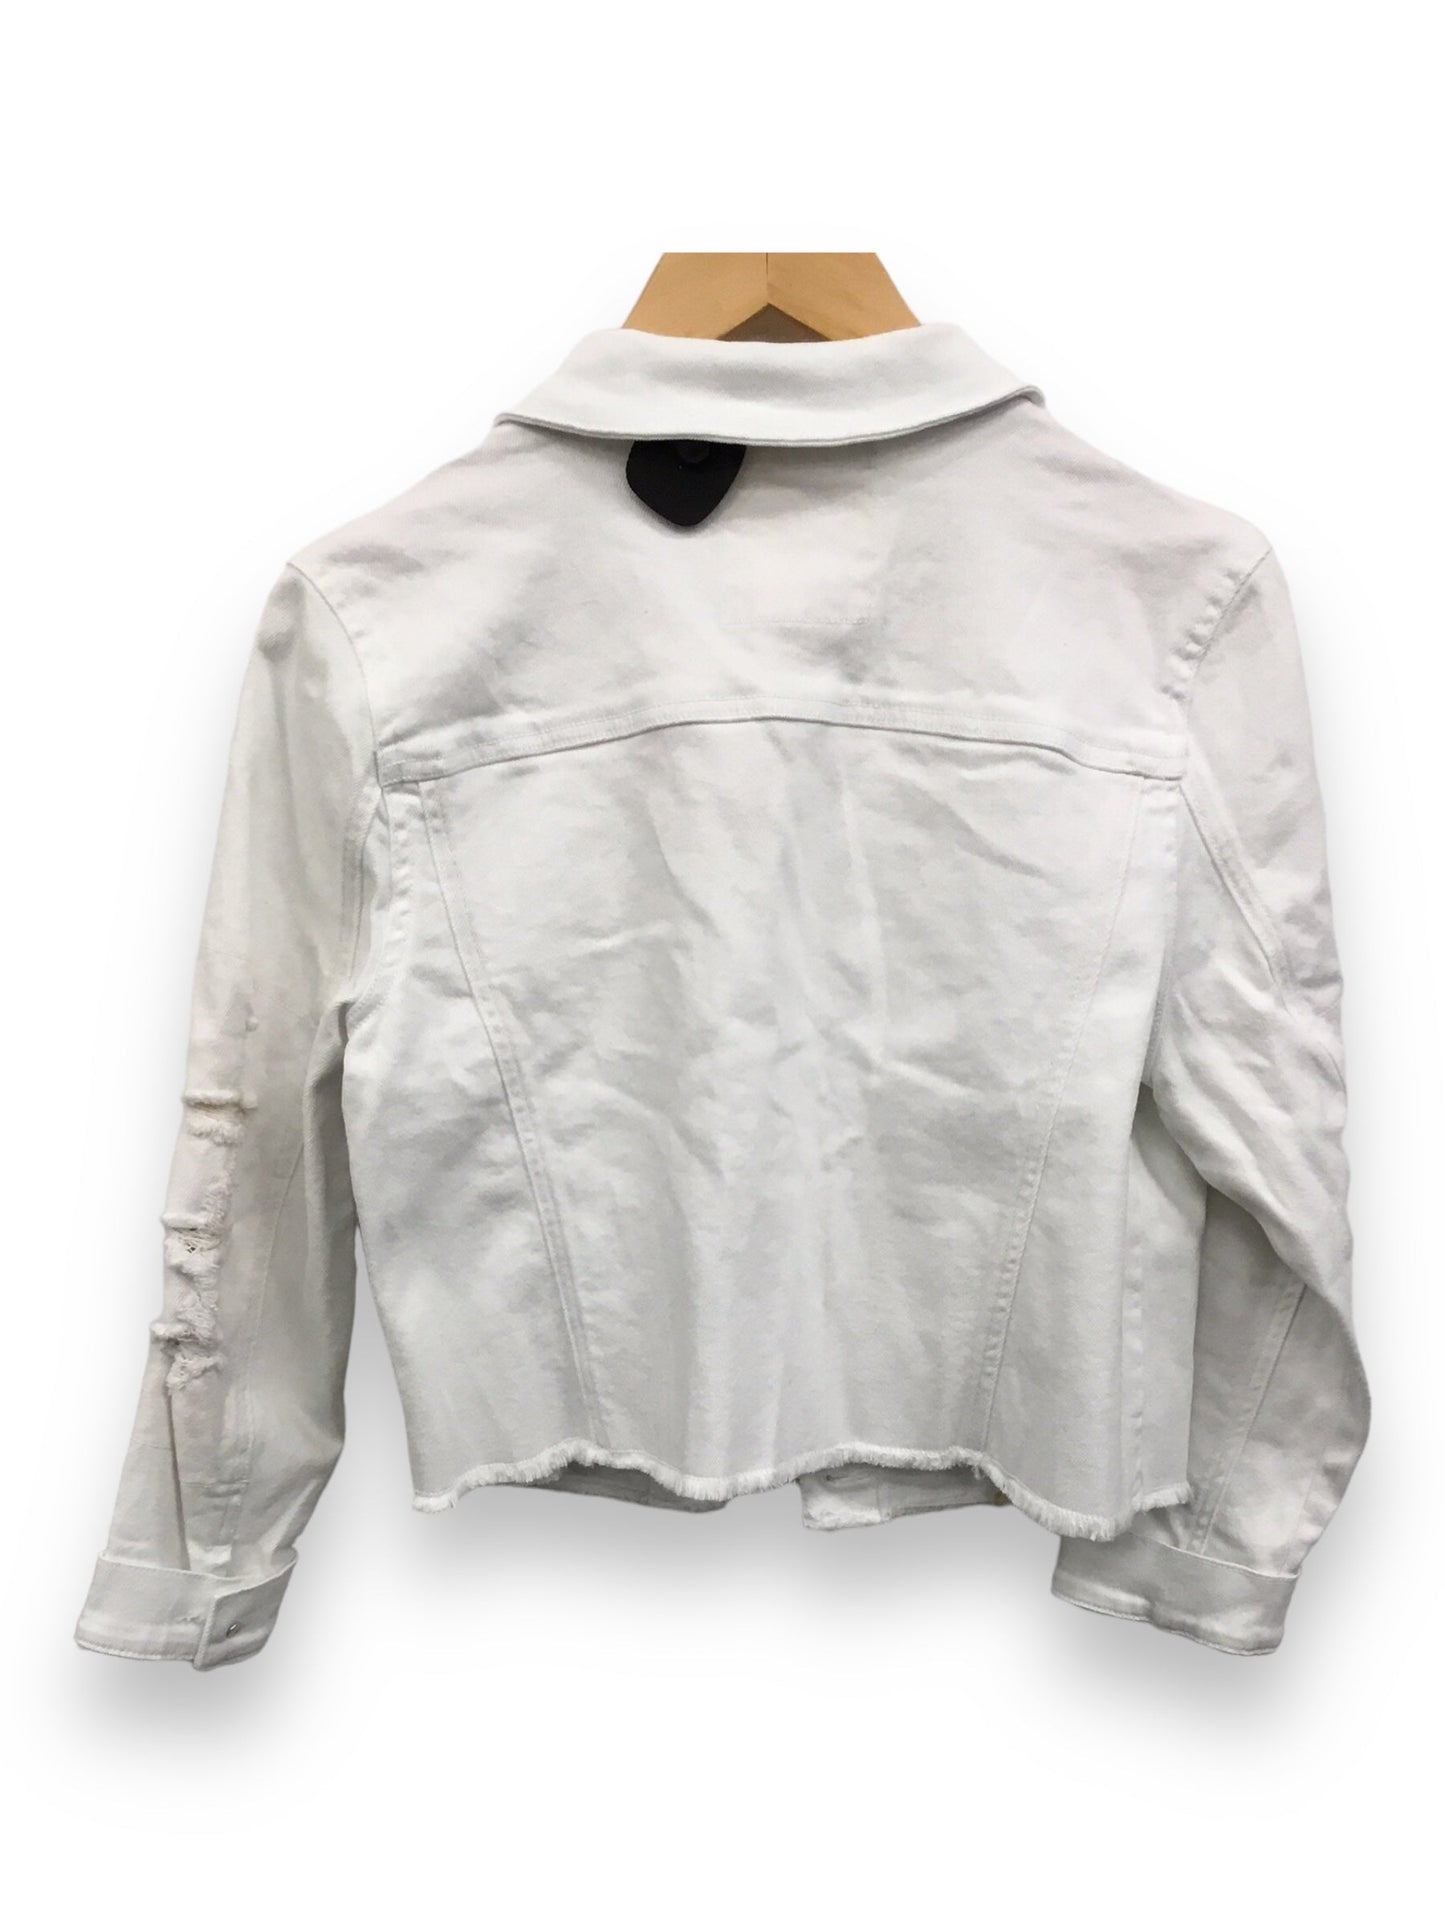 White Jacket Denim Clothes Mentor, Size Xs